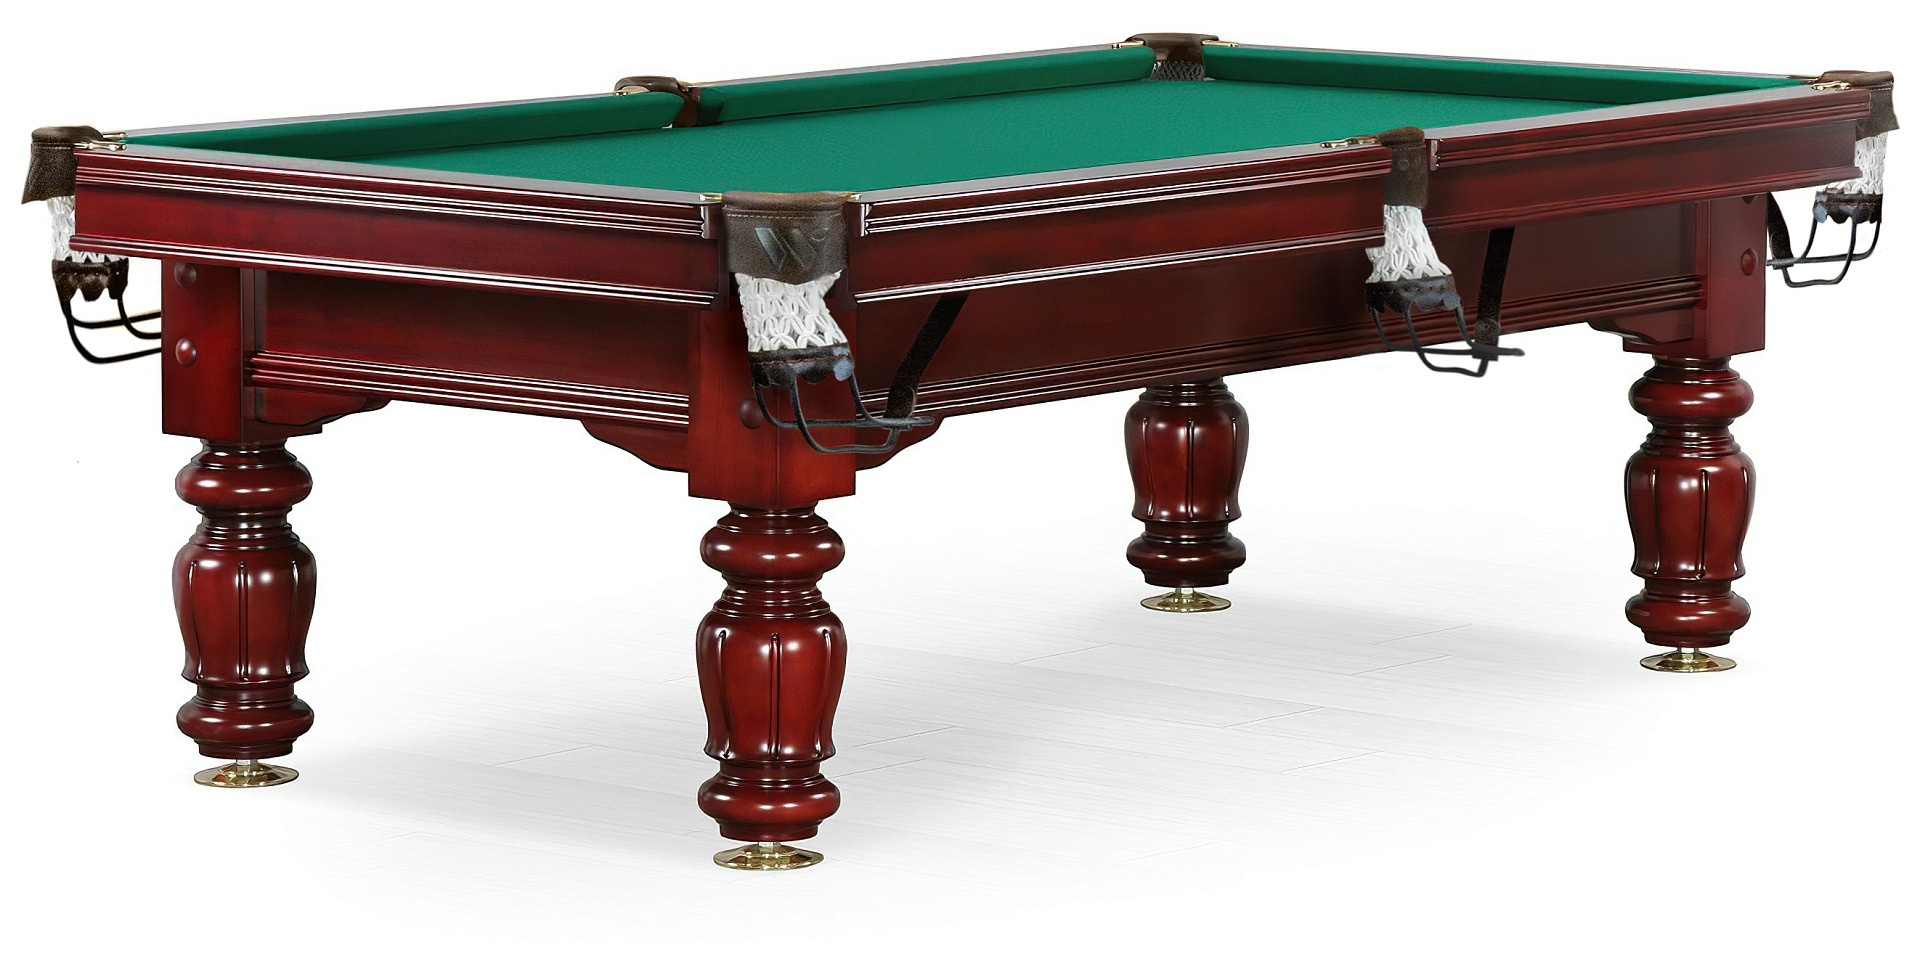 Weekend Billiard Classic II - 8 футов (махагон) из каталога игровых столов в Санкт-Петербурге по цене 148500 ₽